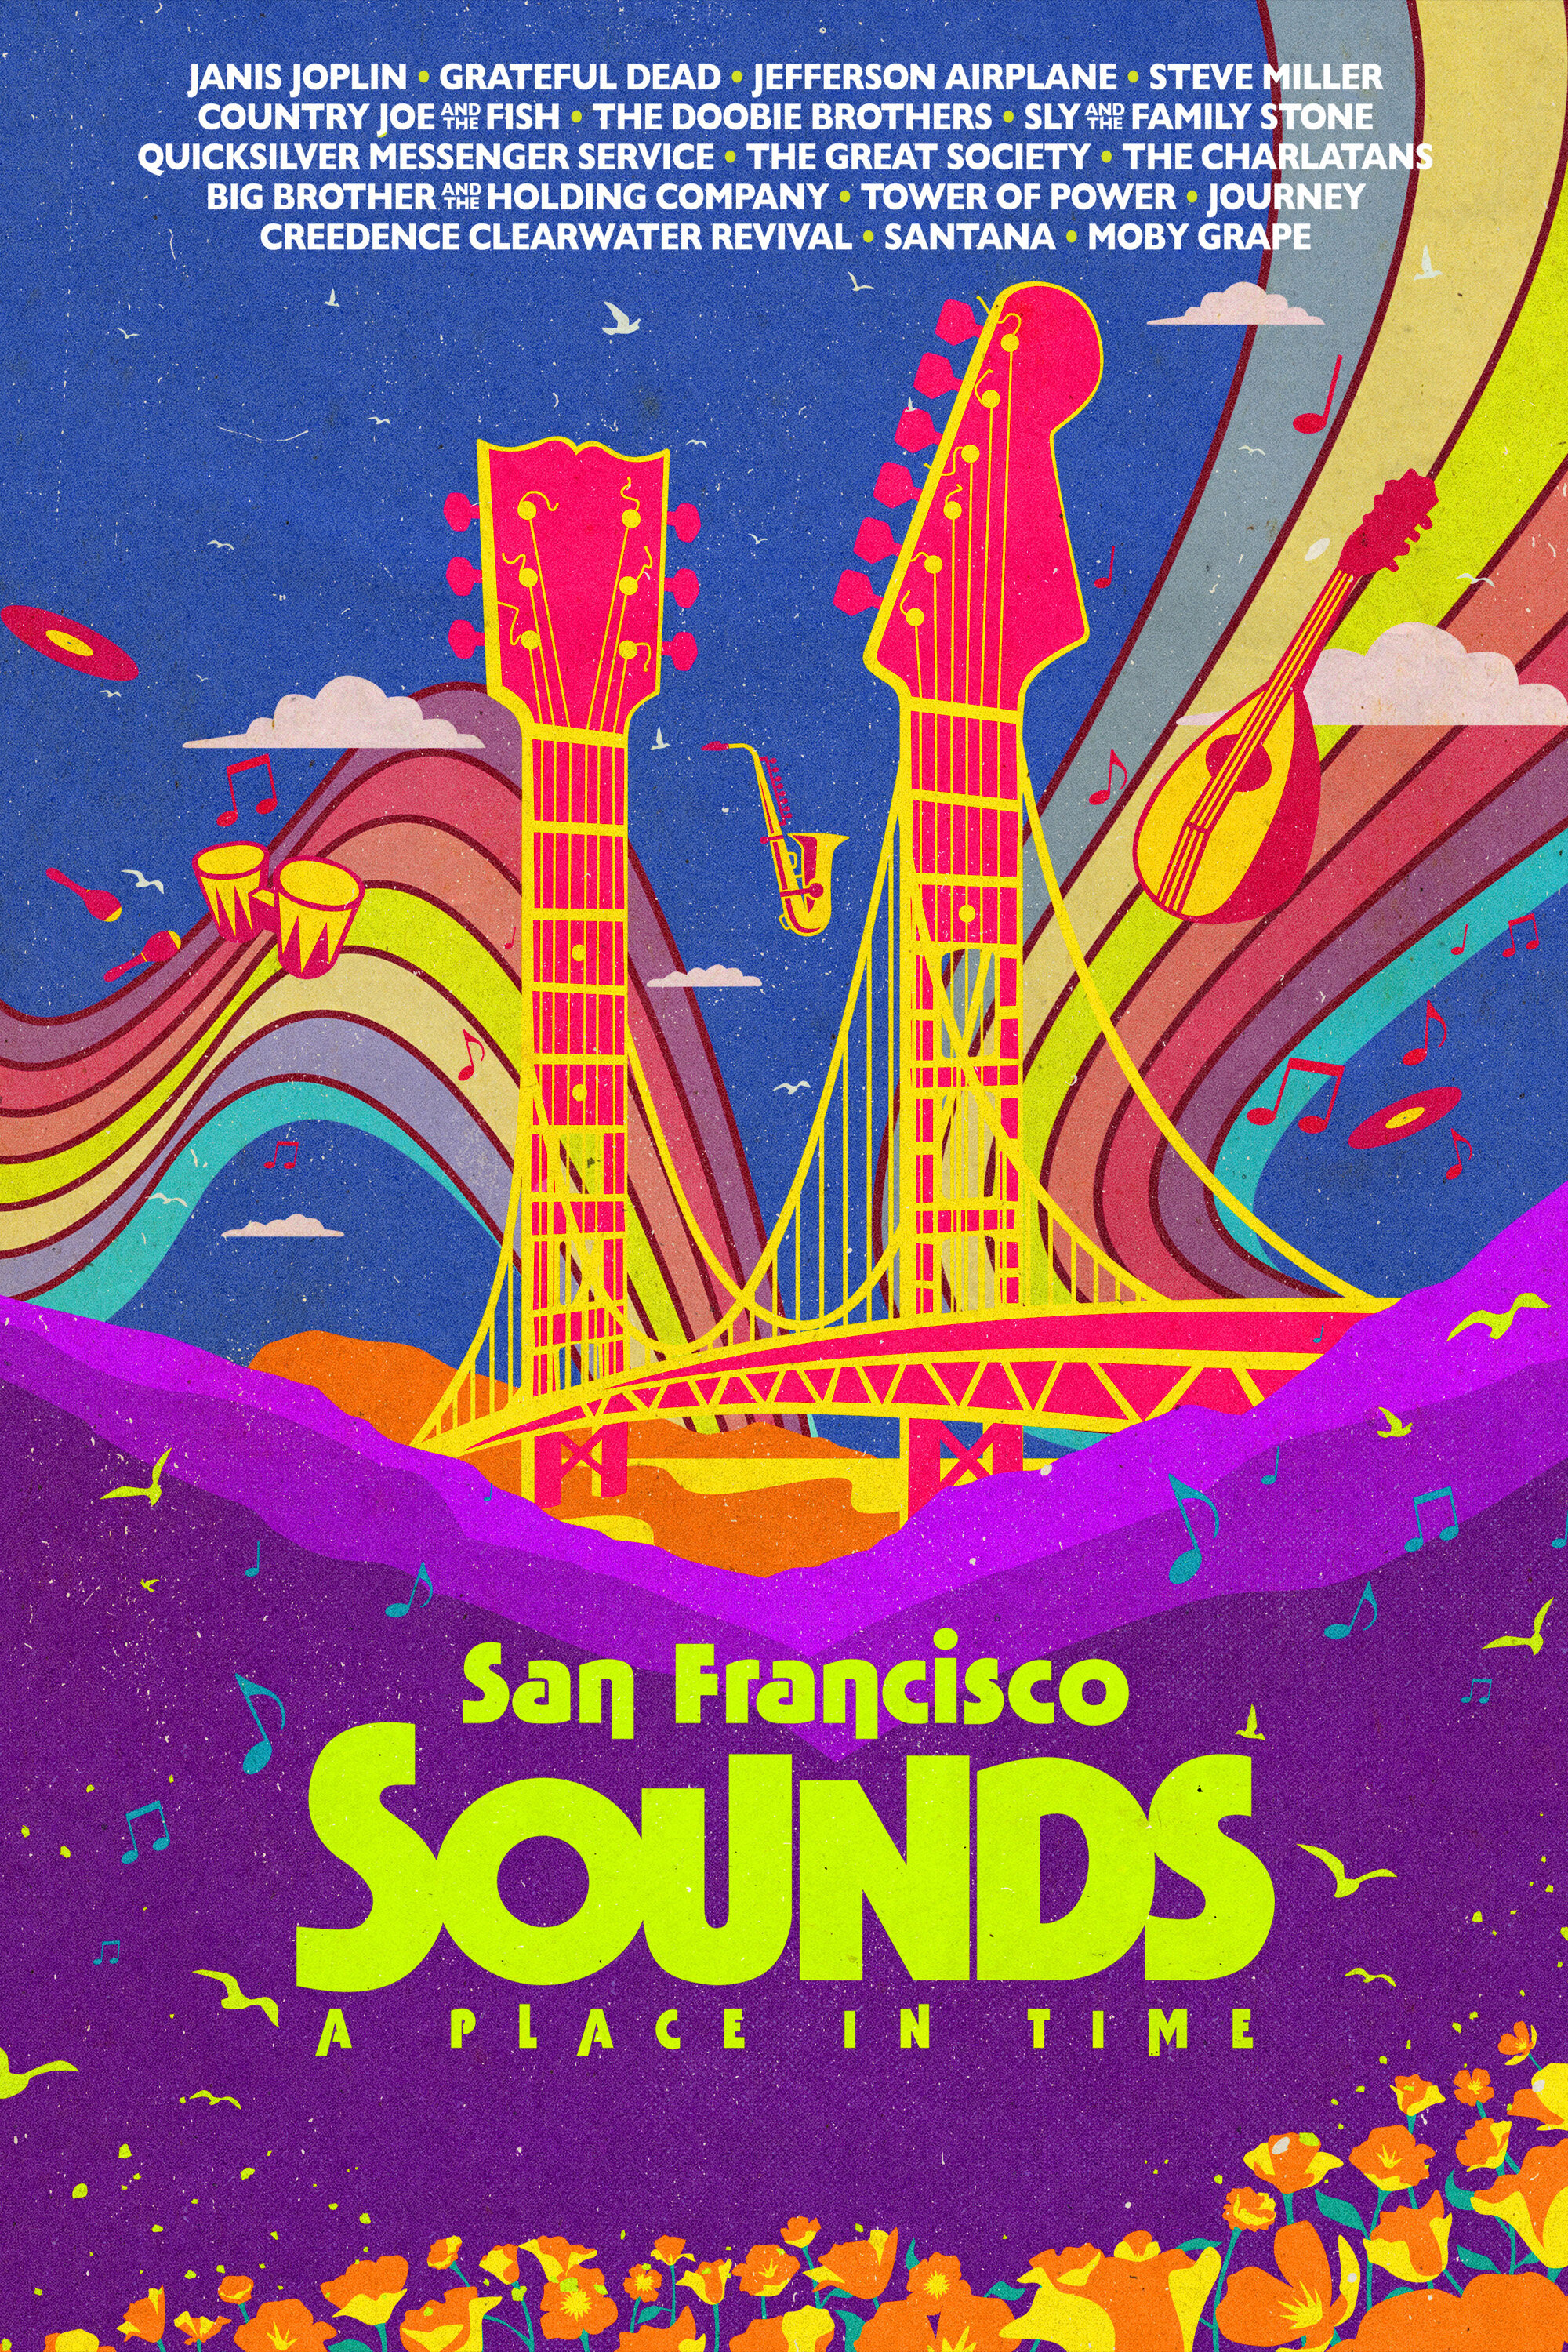 San Francisco Sounds: A Place in Time ne zaman